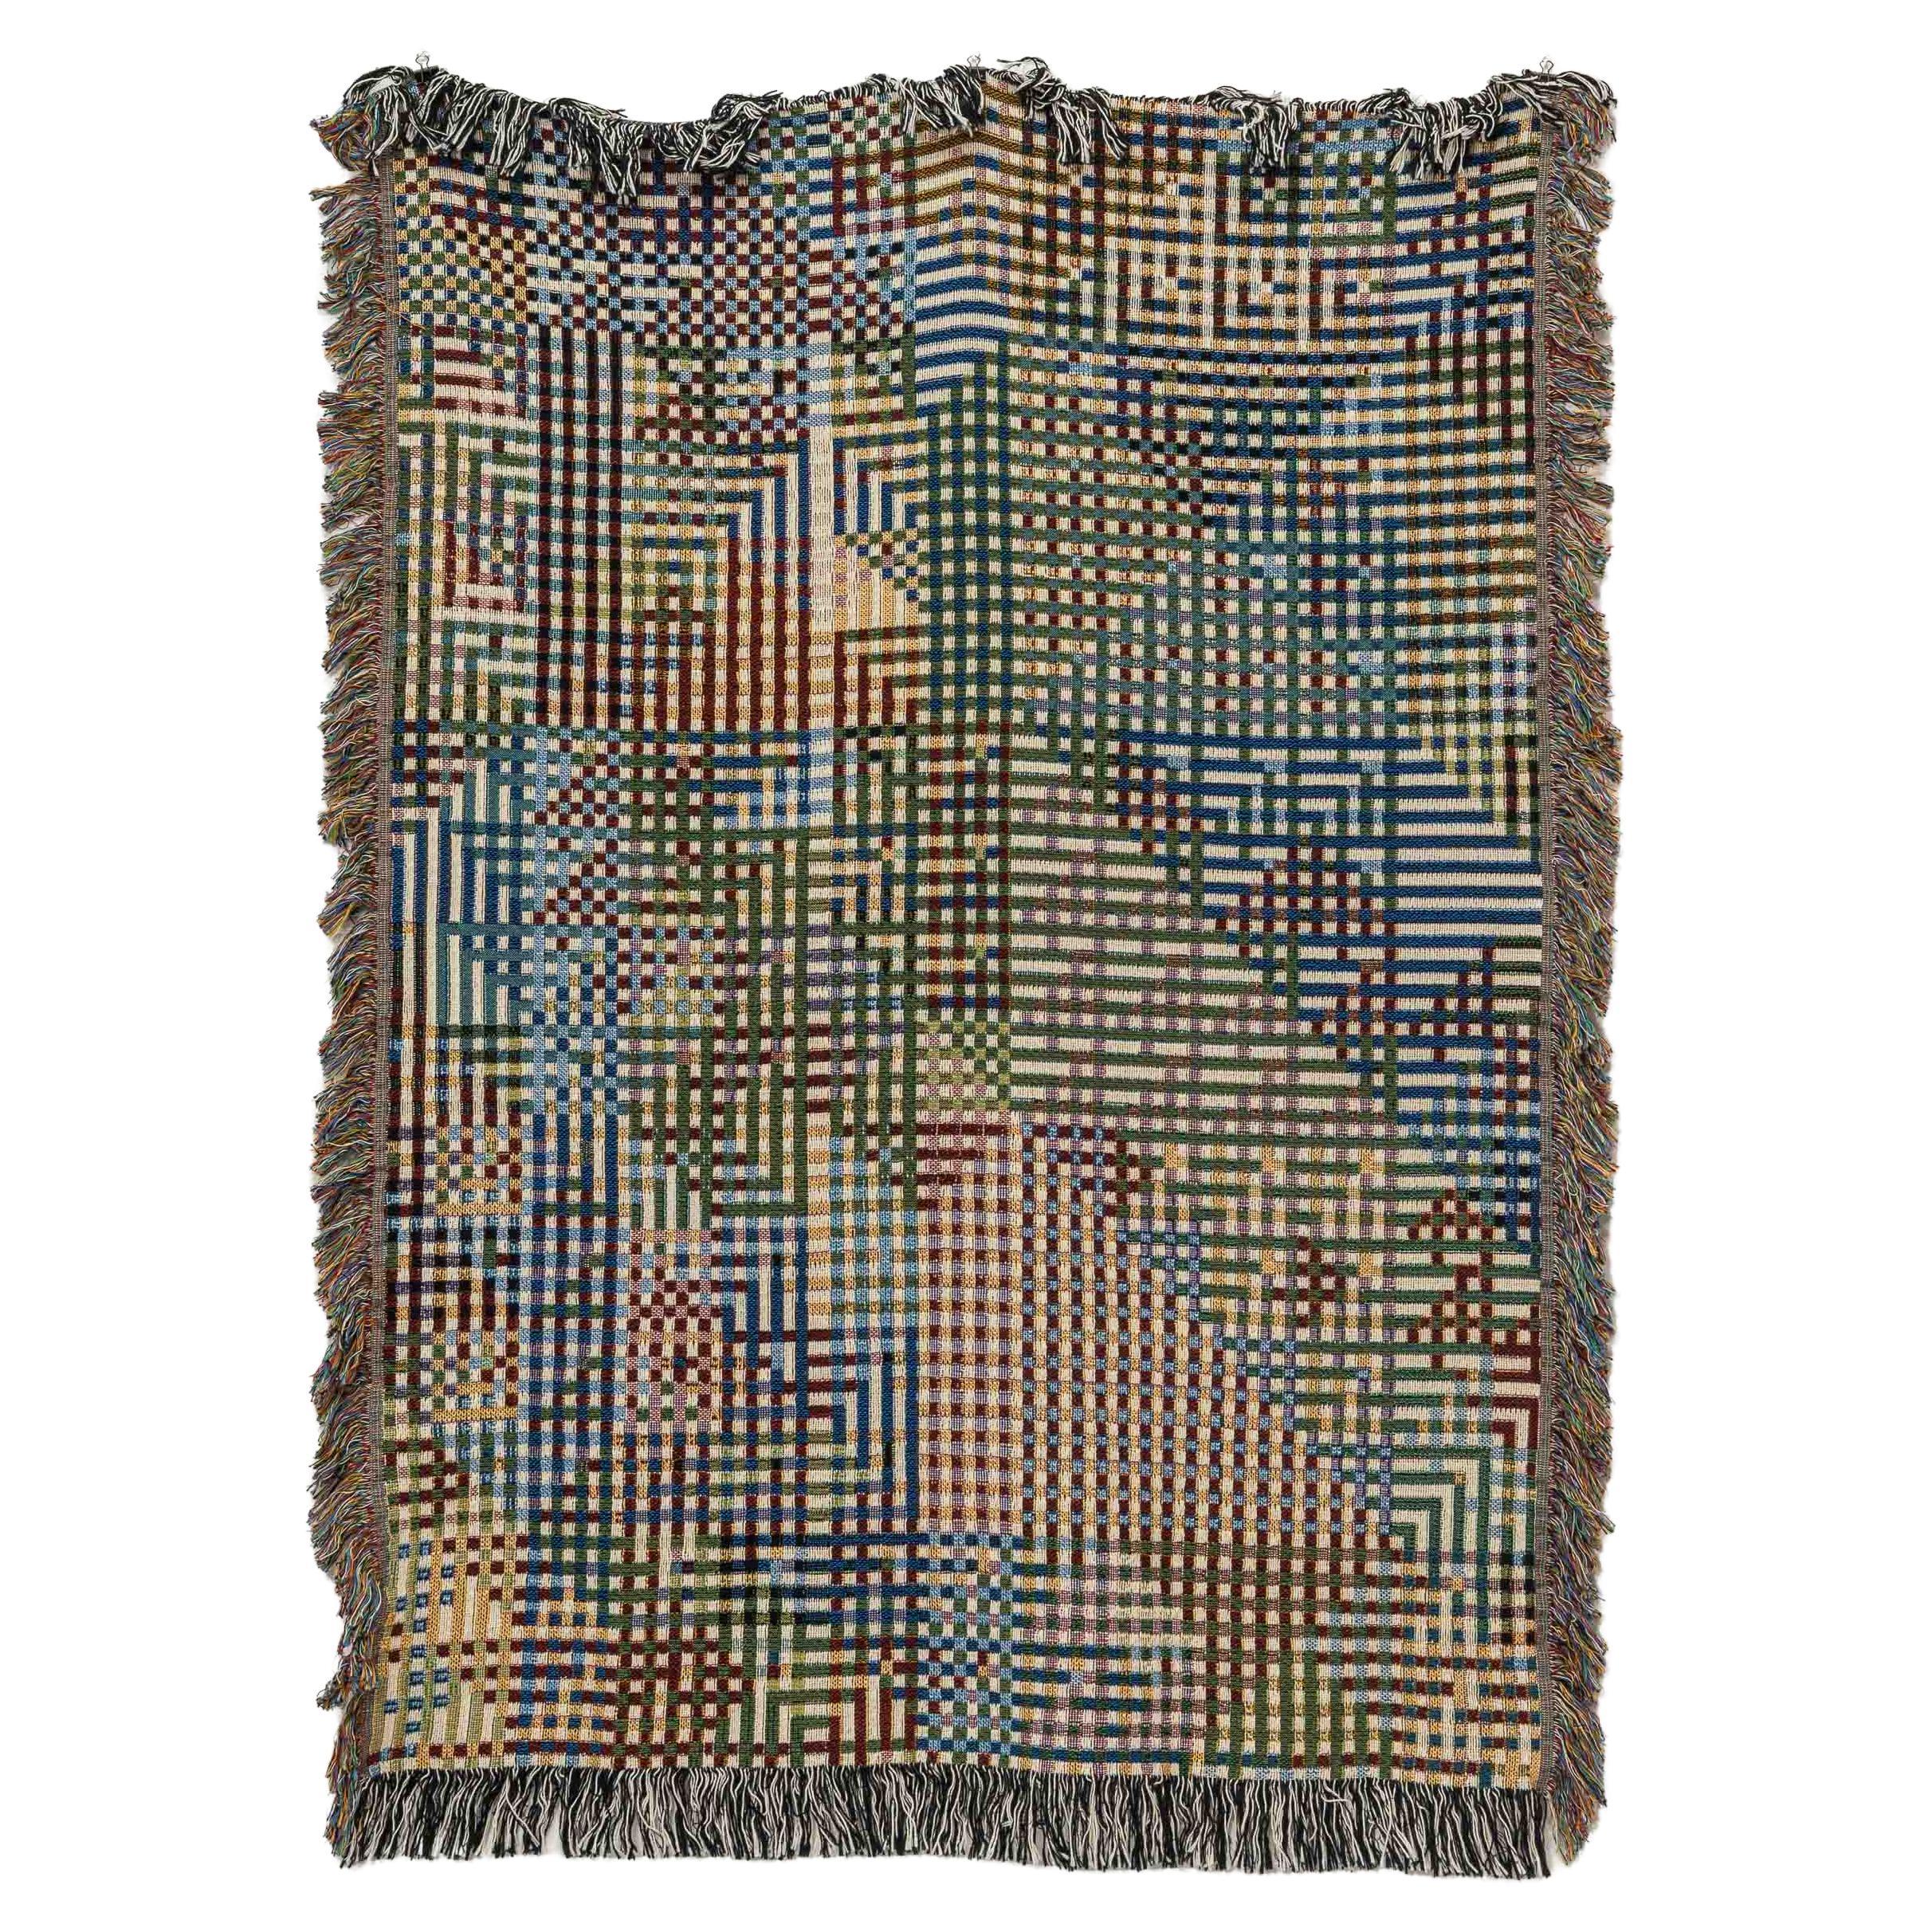 Bit Map Throw Blanket 03, 100% Cotton Woven Contemporary Pixel Art, 37"x52"